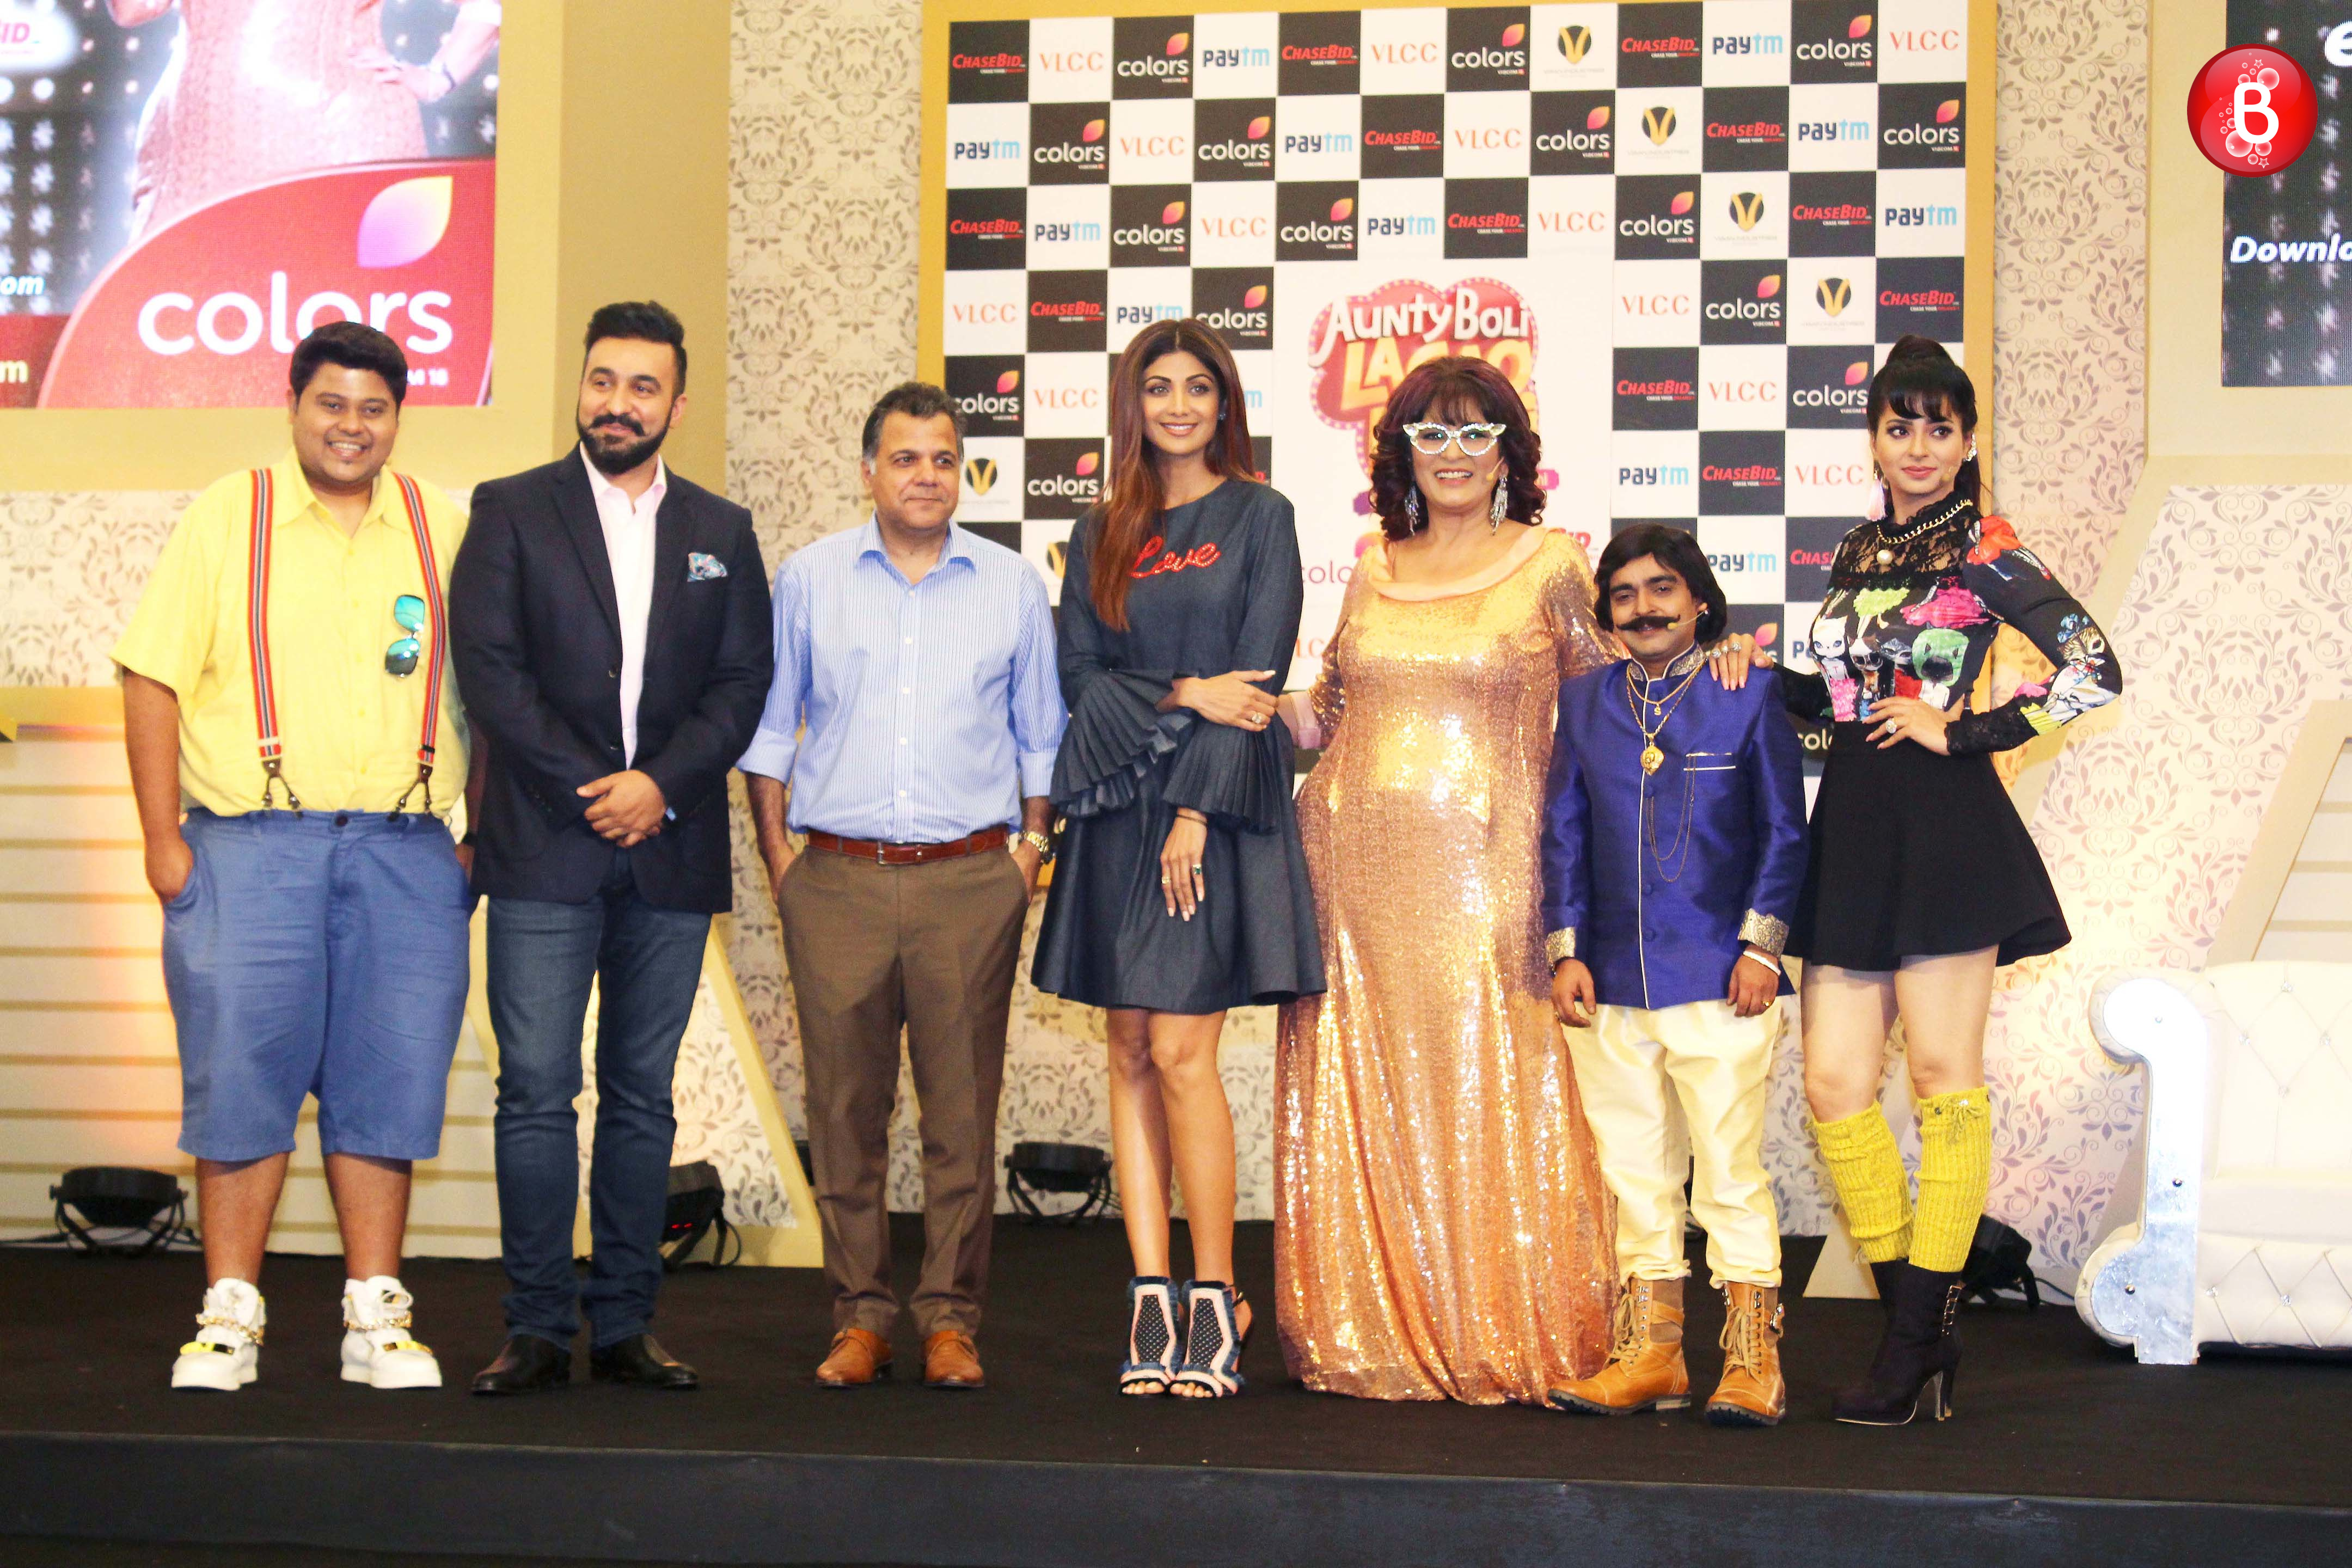 Shilpa Shetty Kundra and Raj Kundra at 'Aunty Boli Lagao Boli' game show event